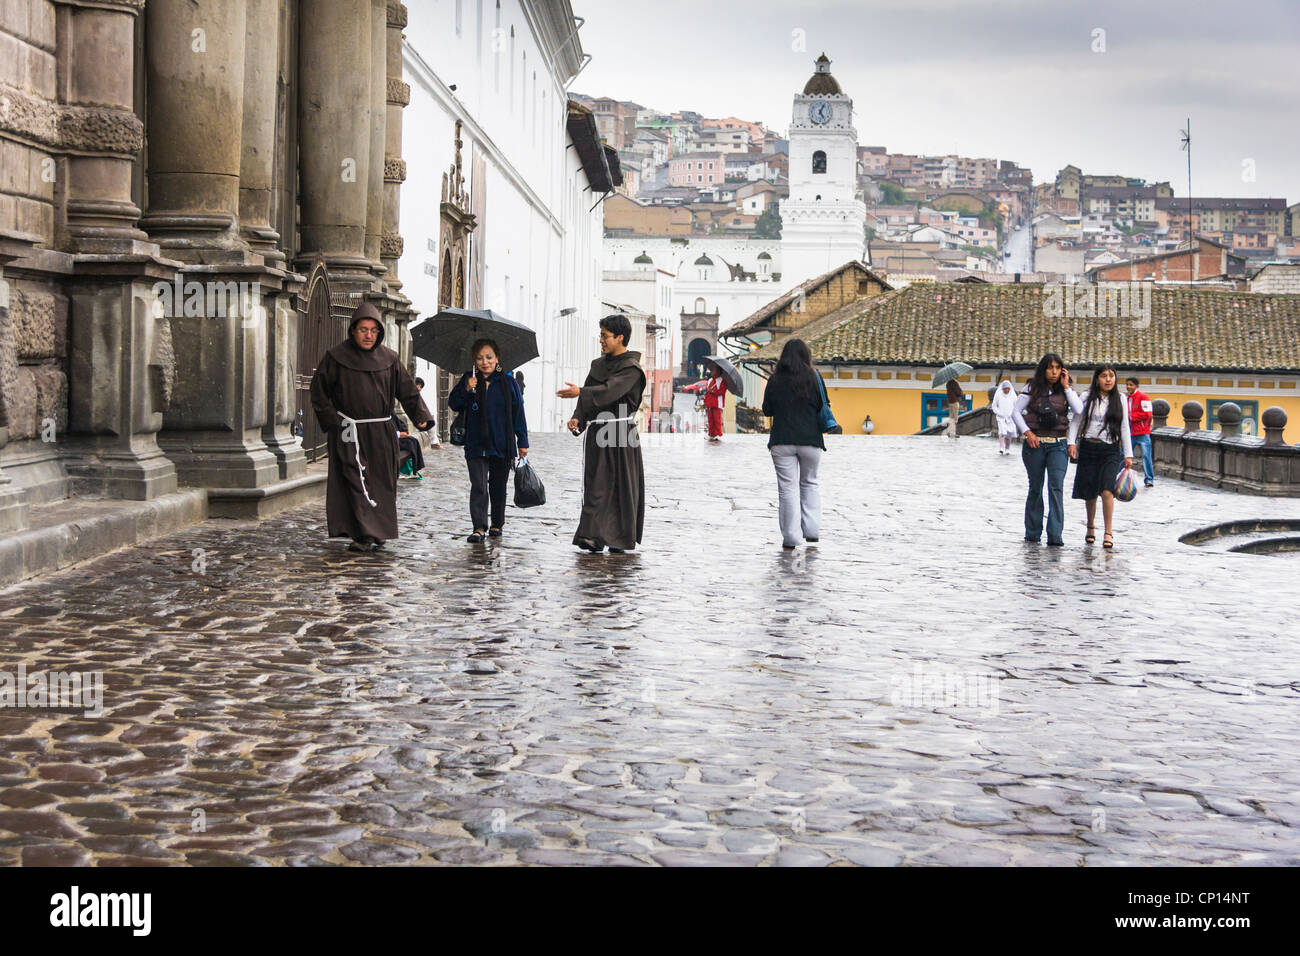 Franciscan friars at "San Francisco Square" or "Plaza San Francisco" in Old Town, Quito, Ecuador - walking in the rain. Stock Photo